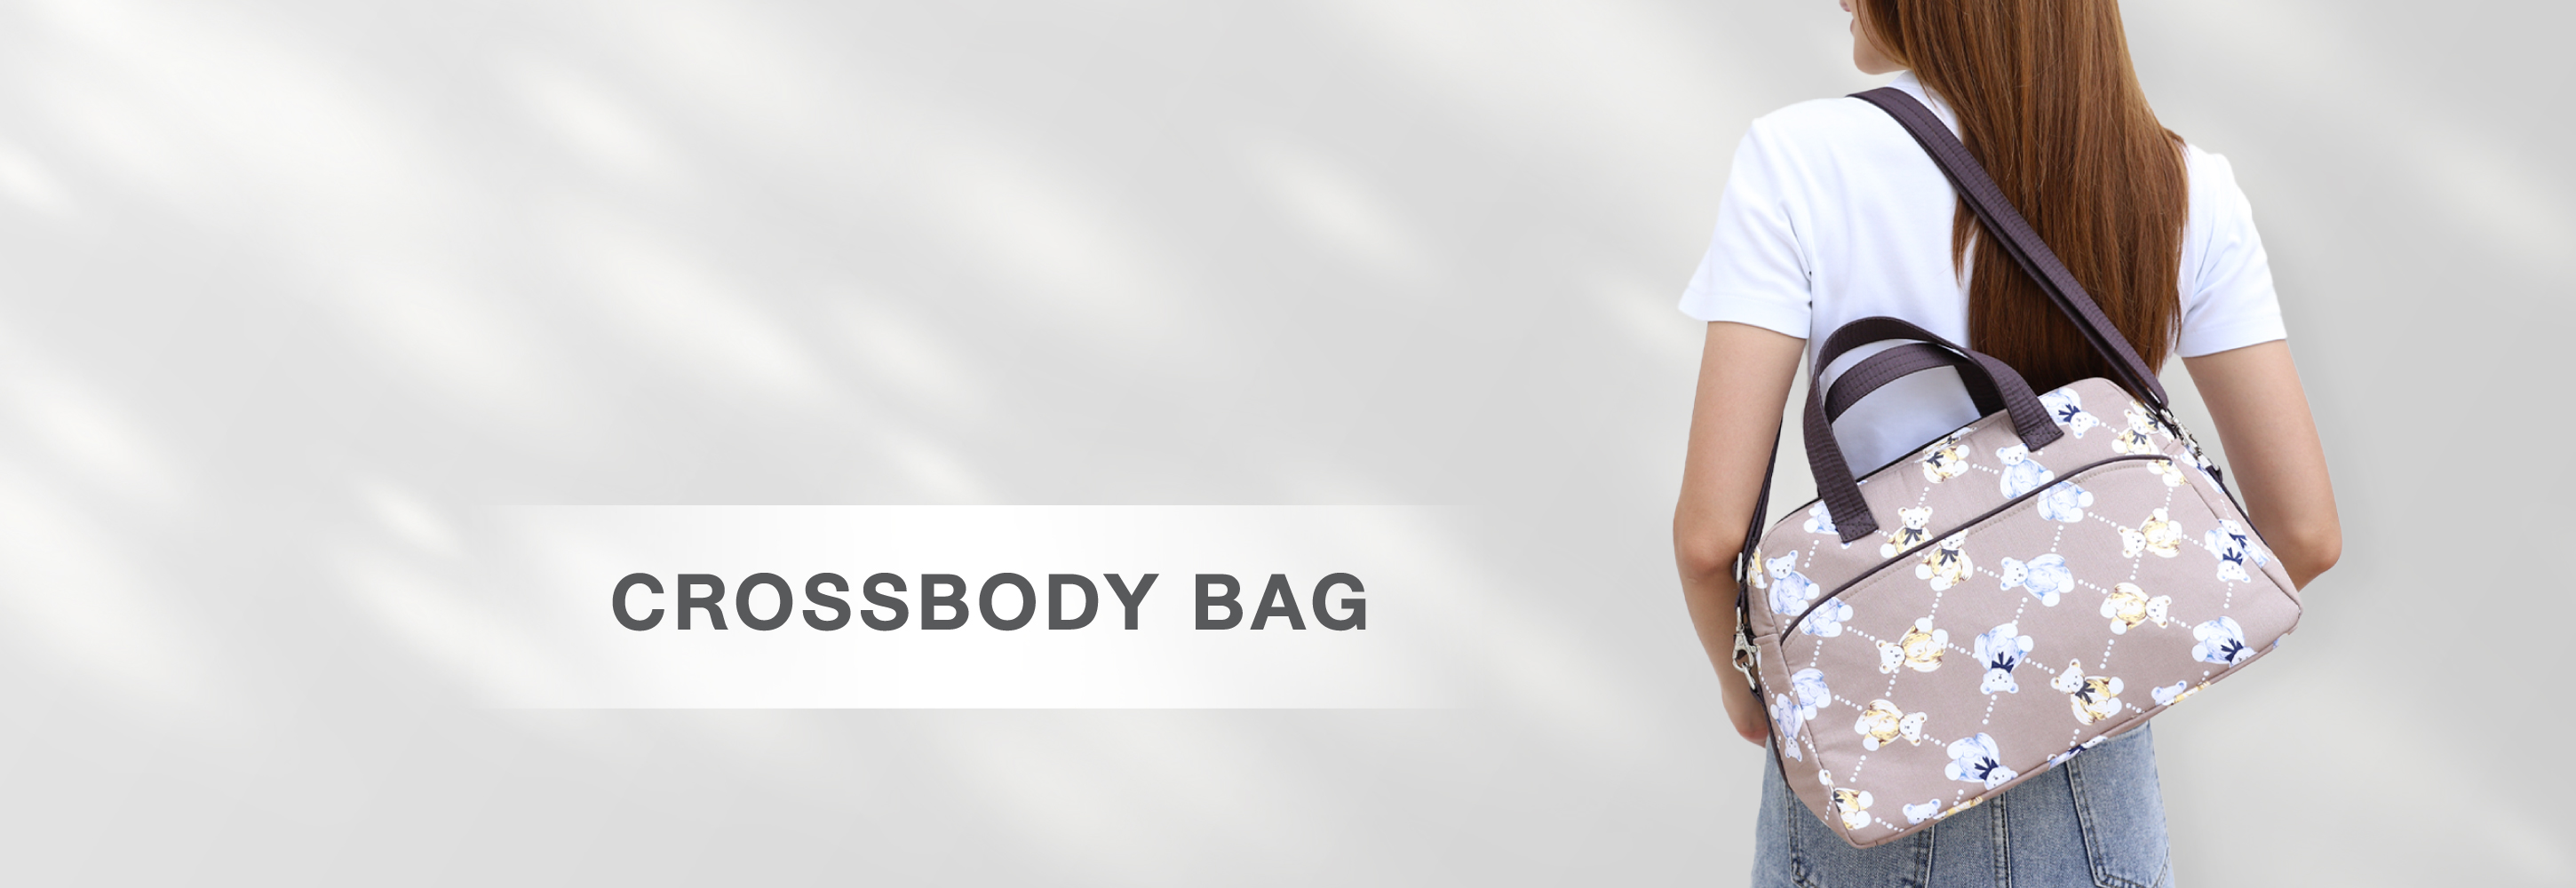 Crossbody Bag